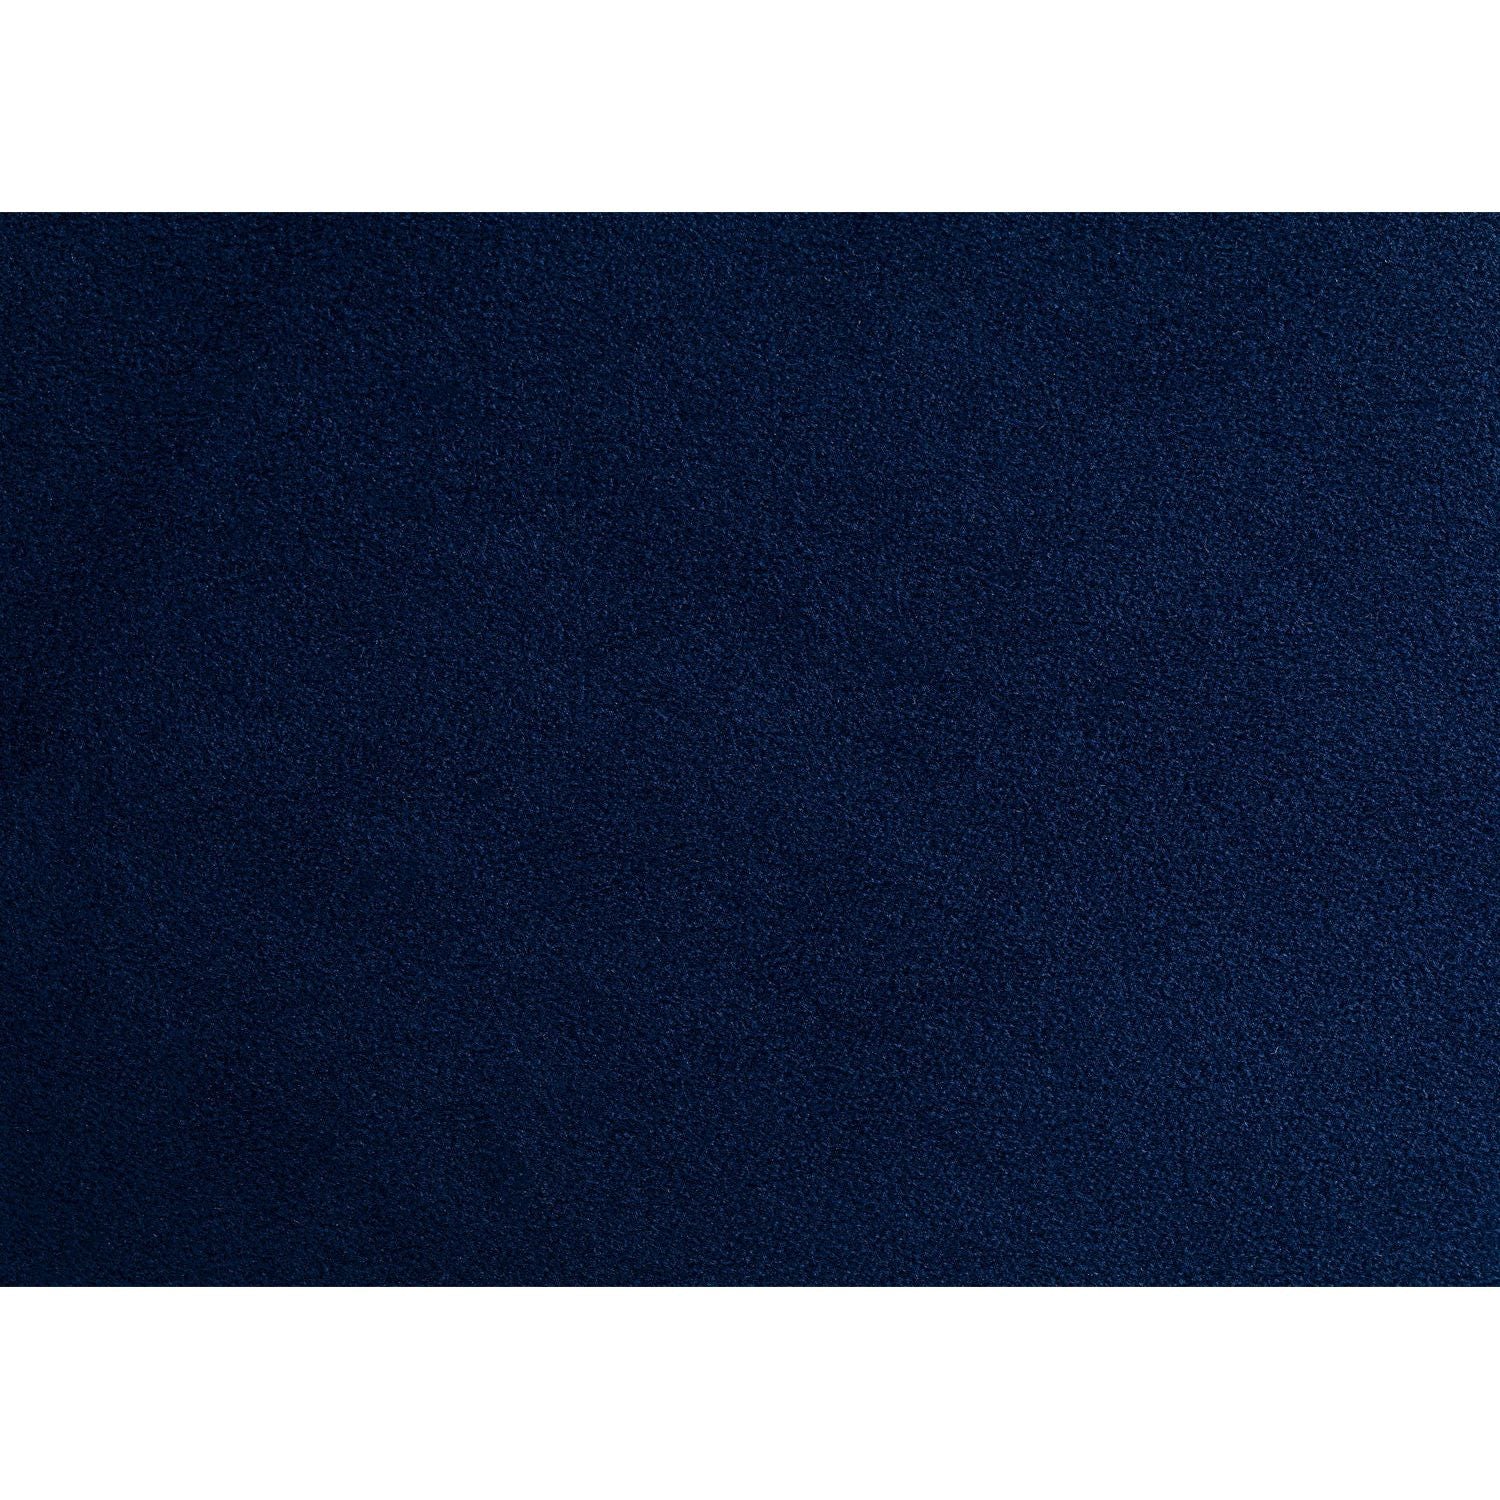 Modulinė sofa KATA, aksomas, mėlyna spalva